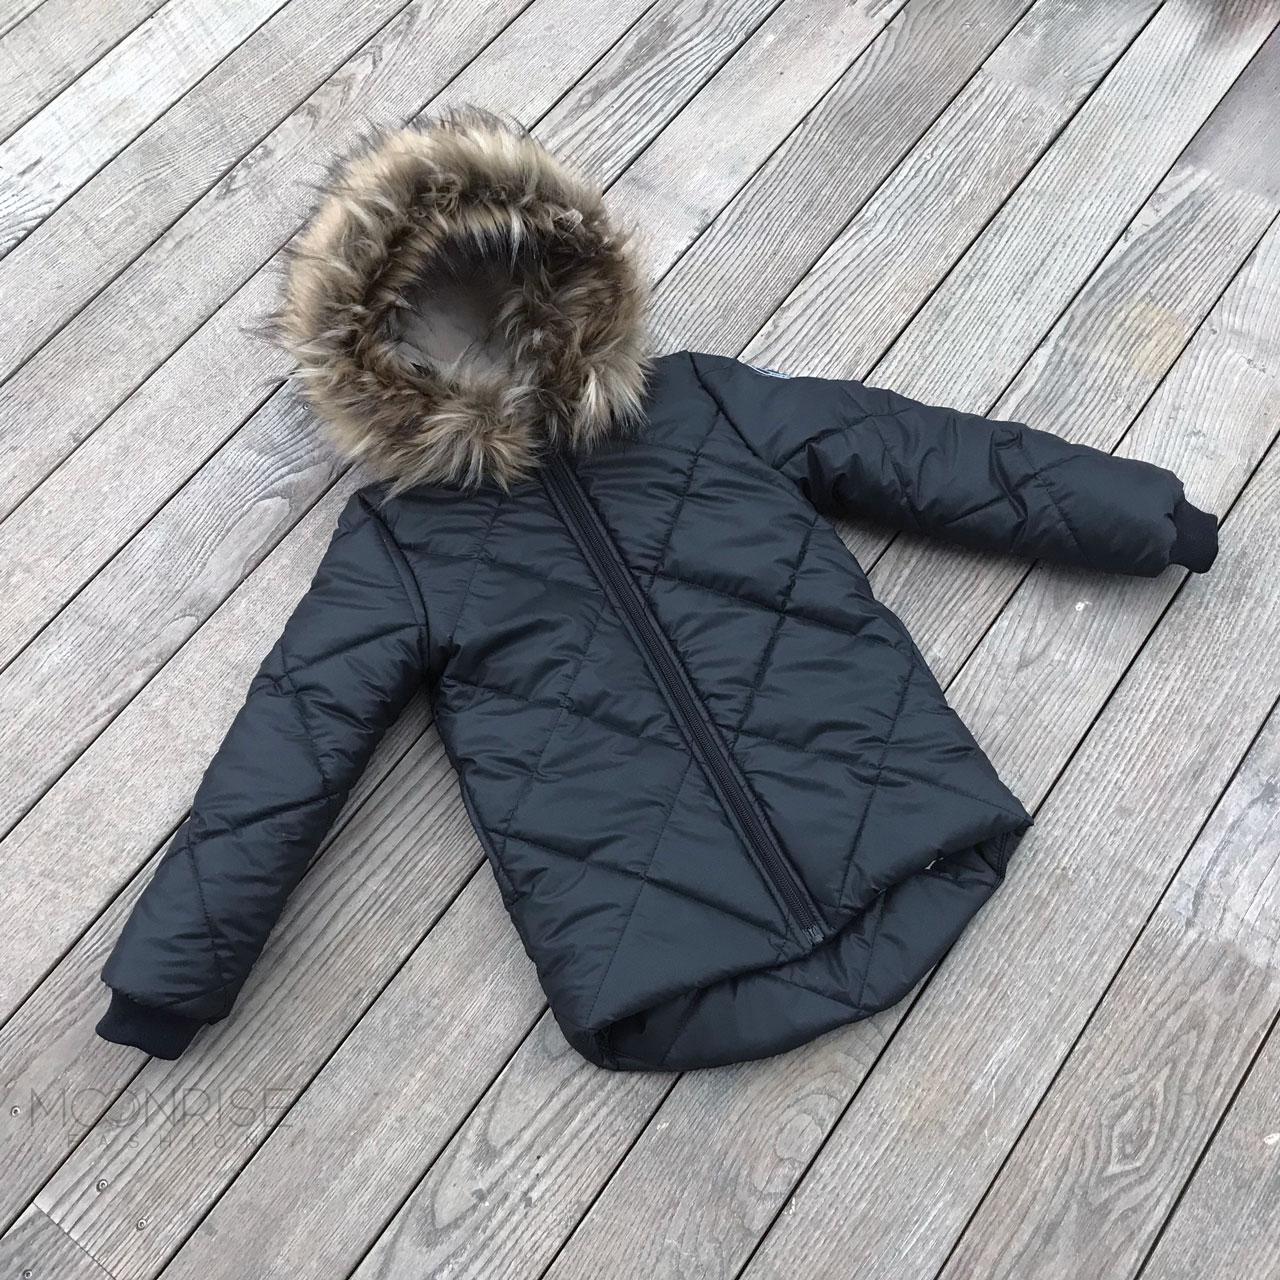 Detská zimná bunda - black "koženkový" efekt